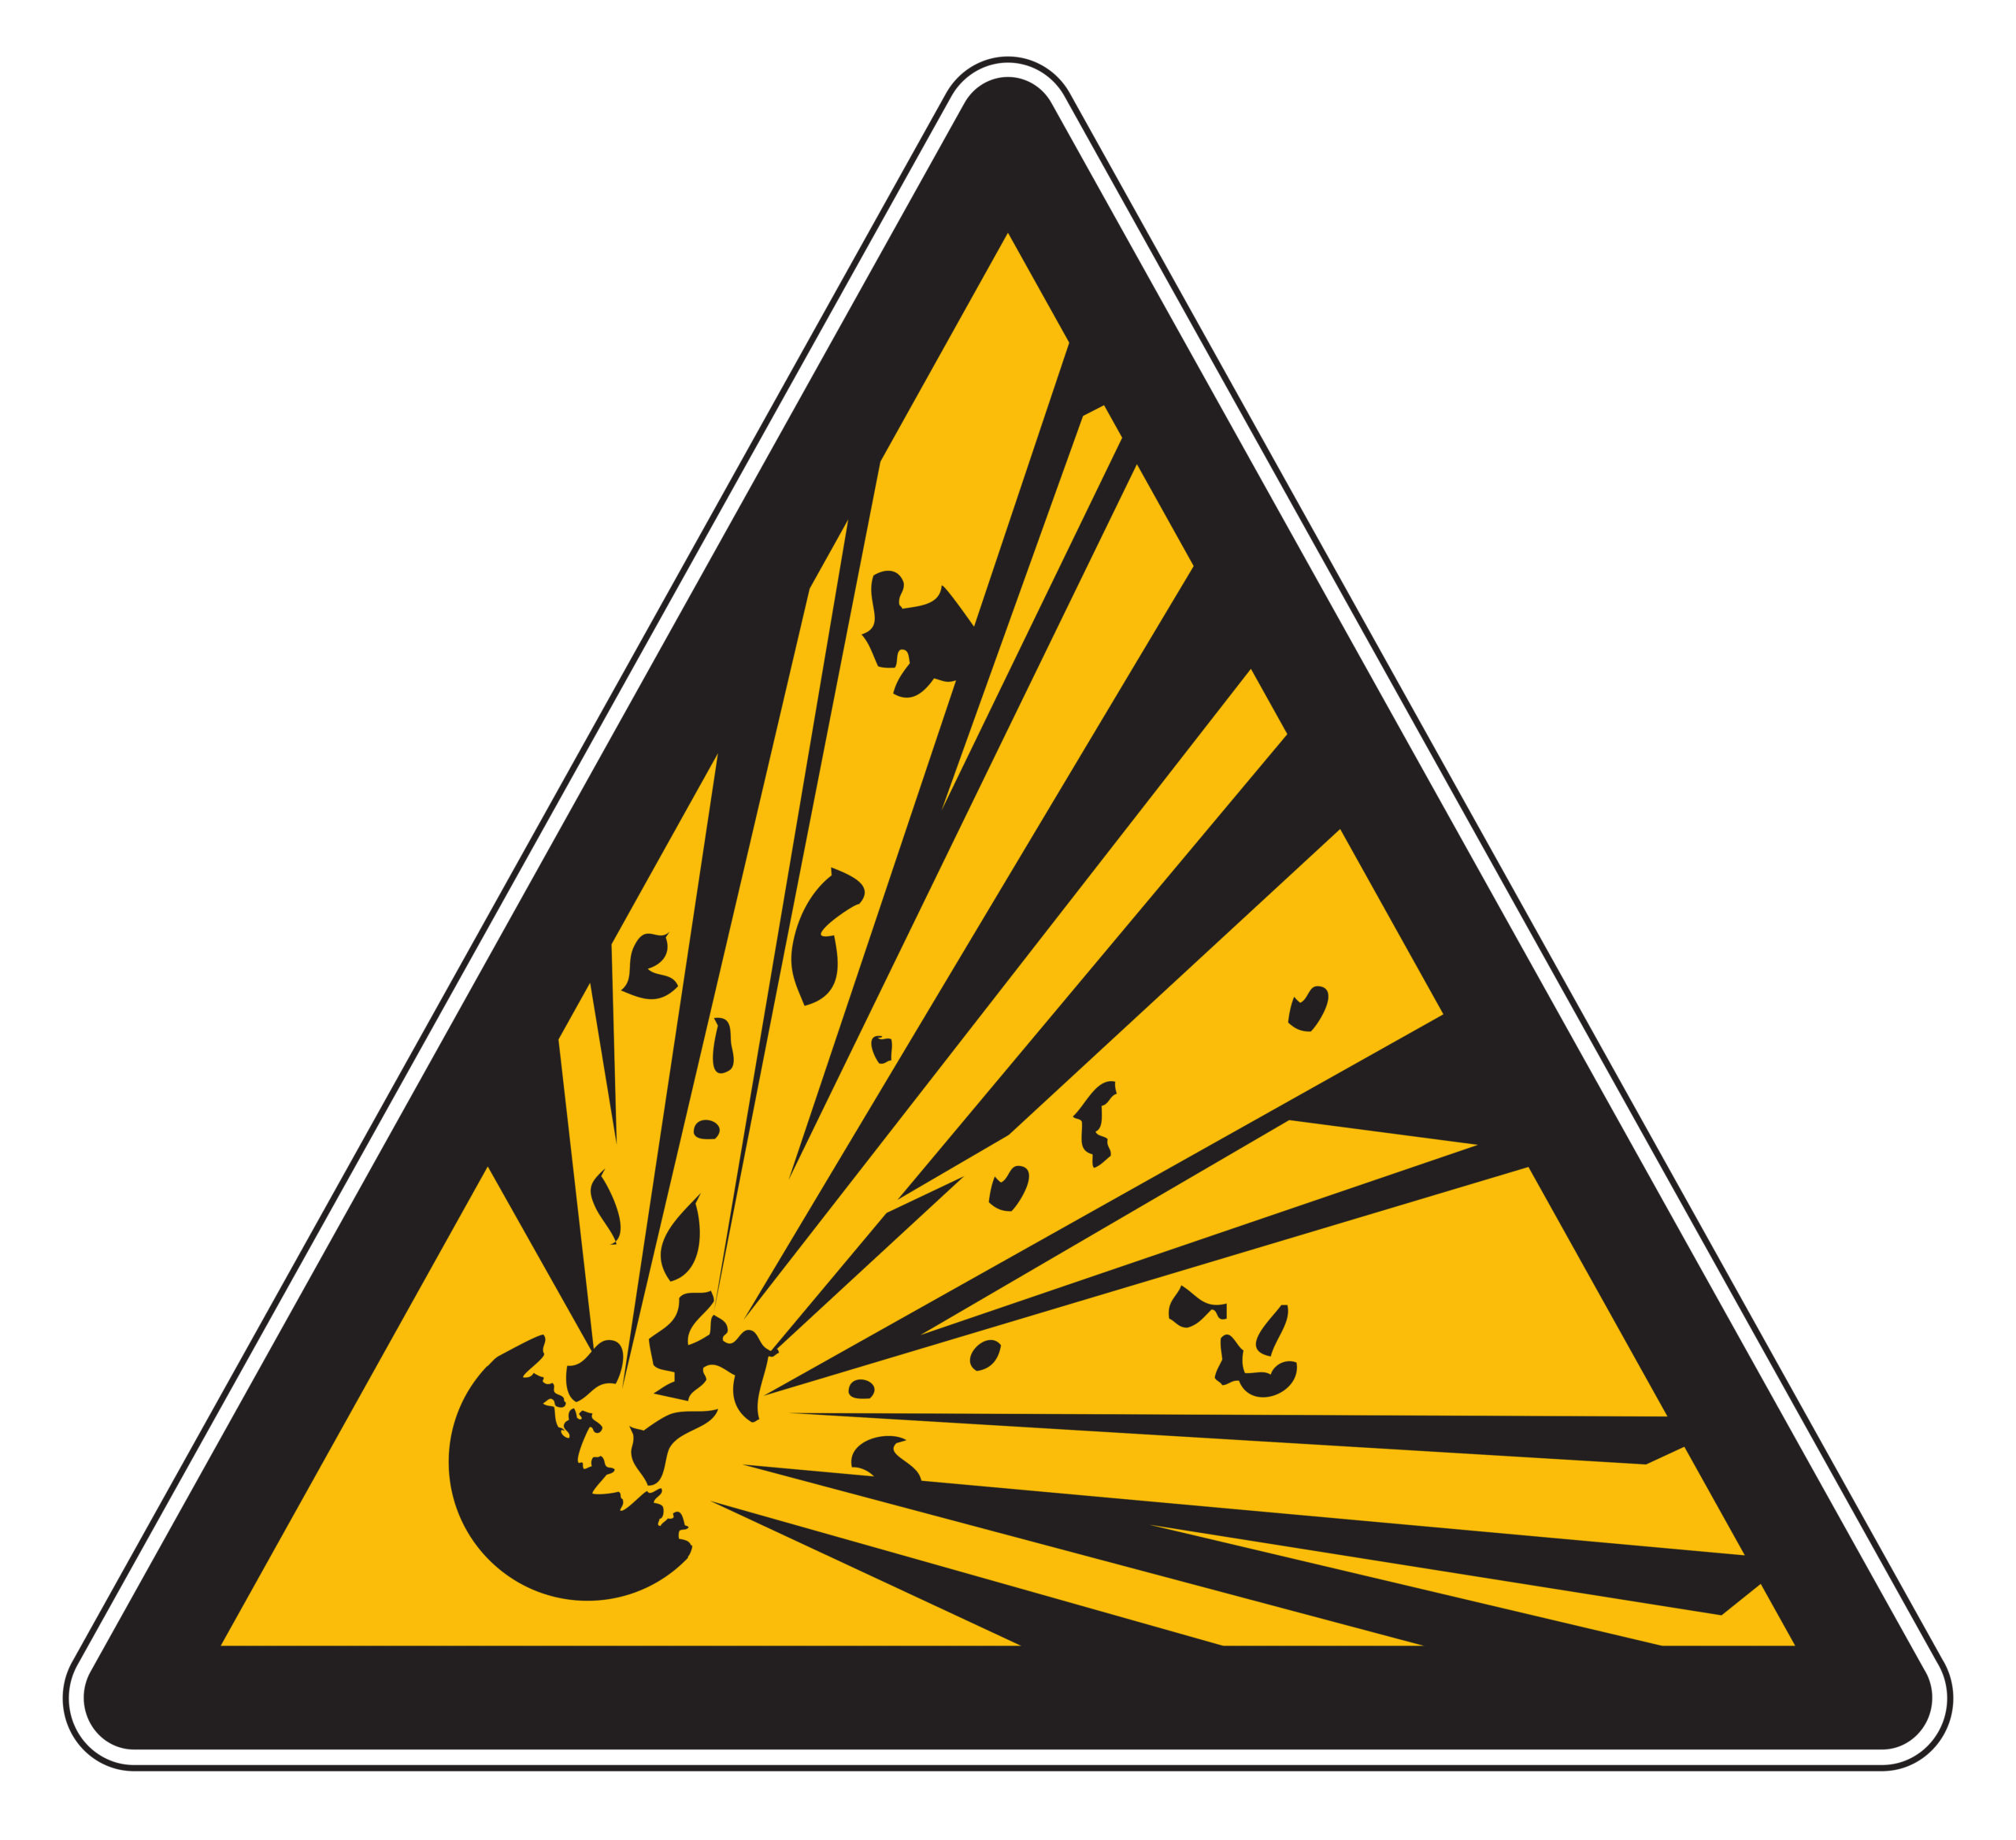 explosive substances warning symbol